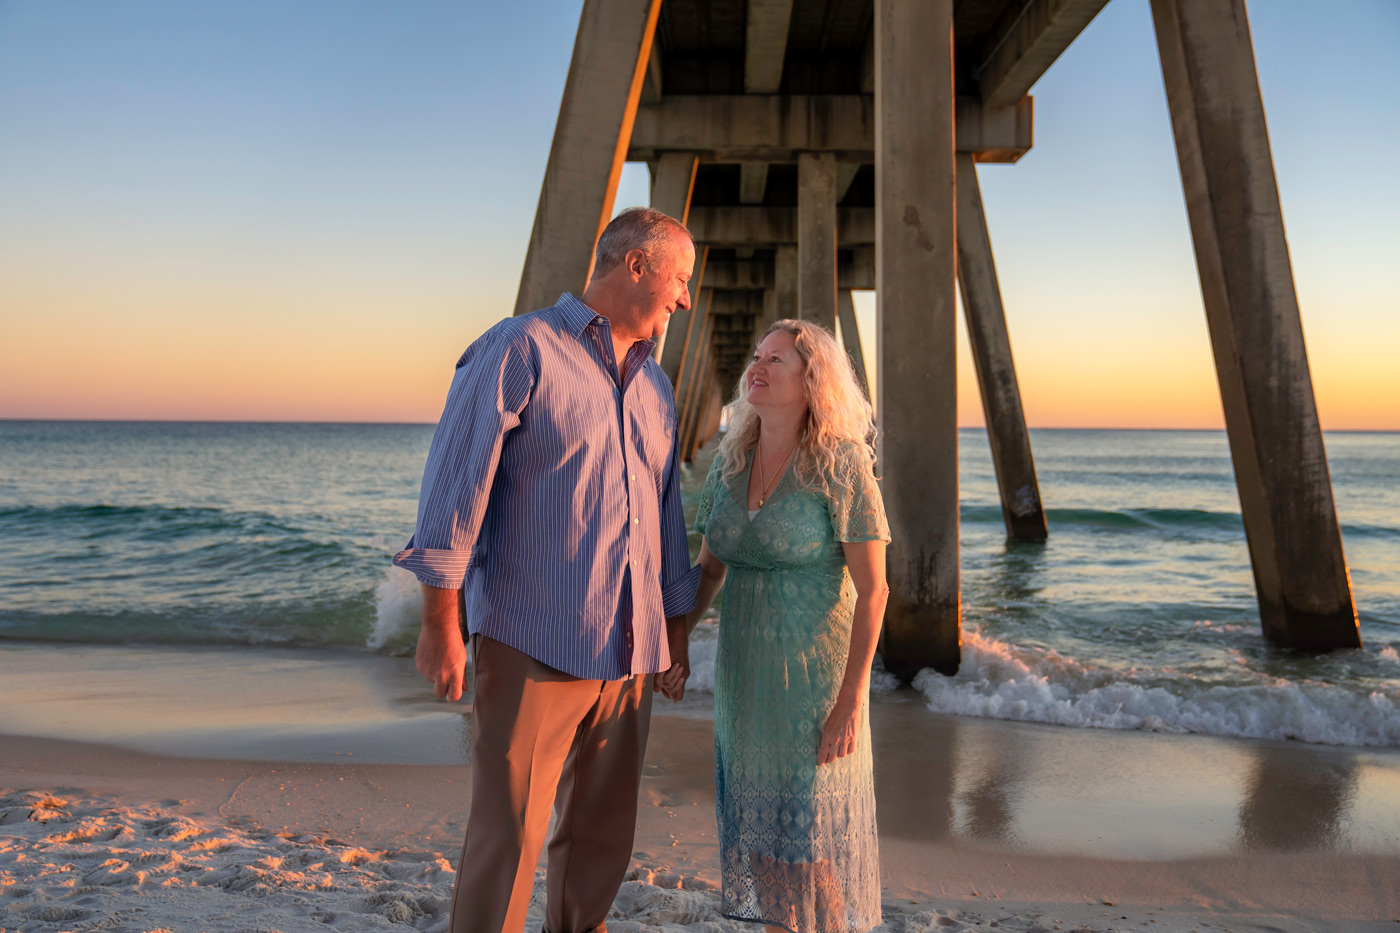 A man and woman standing on the beach under an ocean pier.